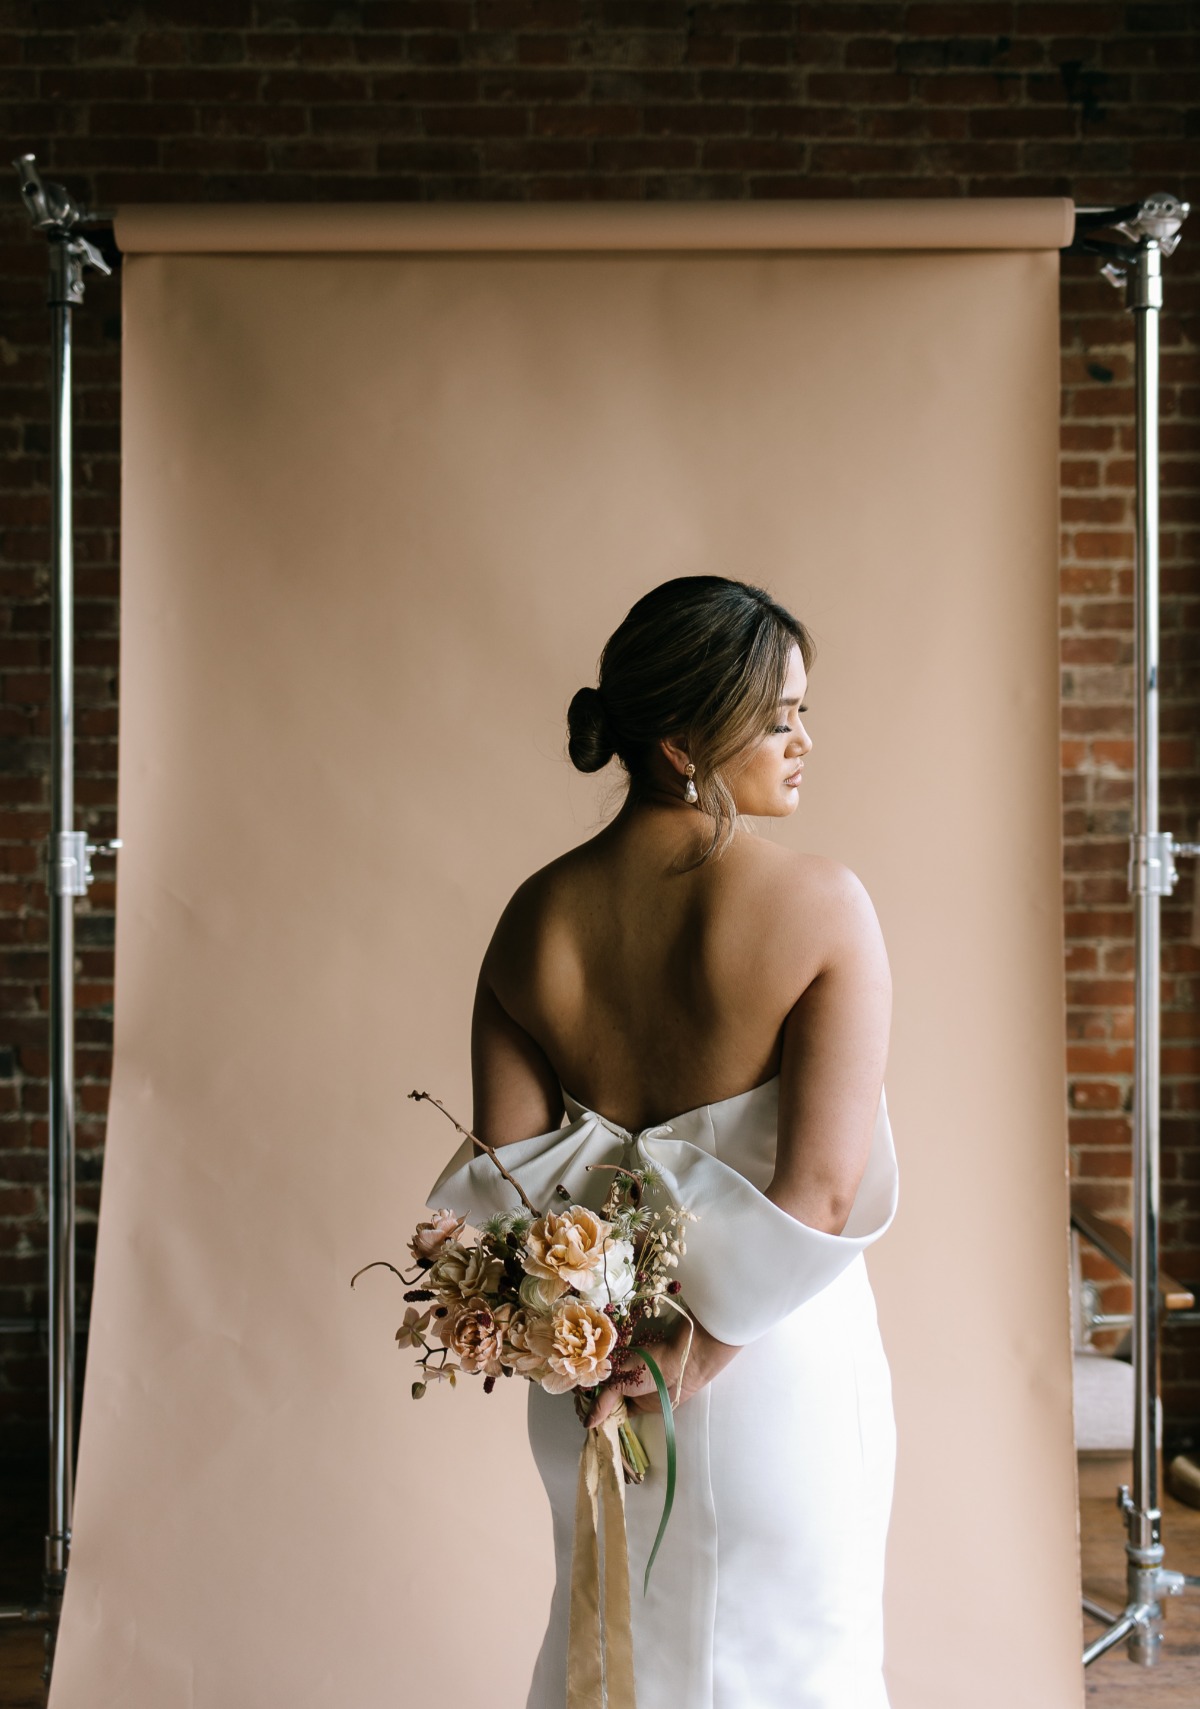 Unique couture wedding dress with open back and unique detailing